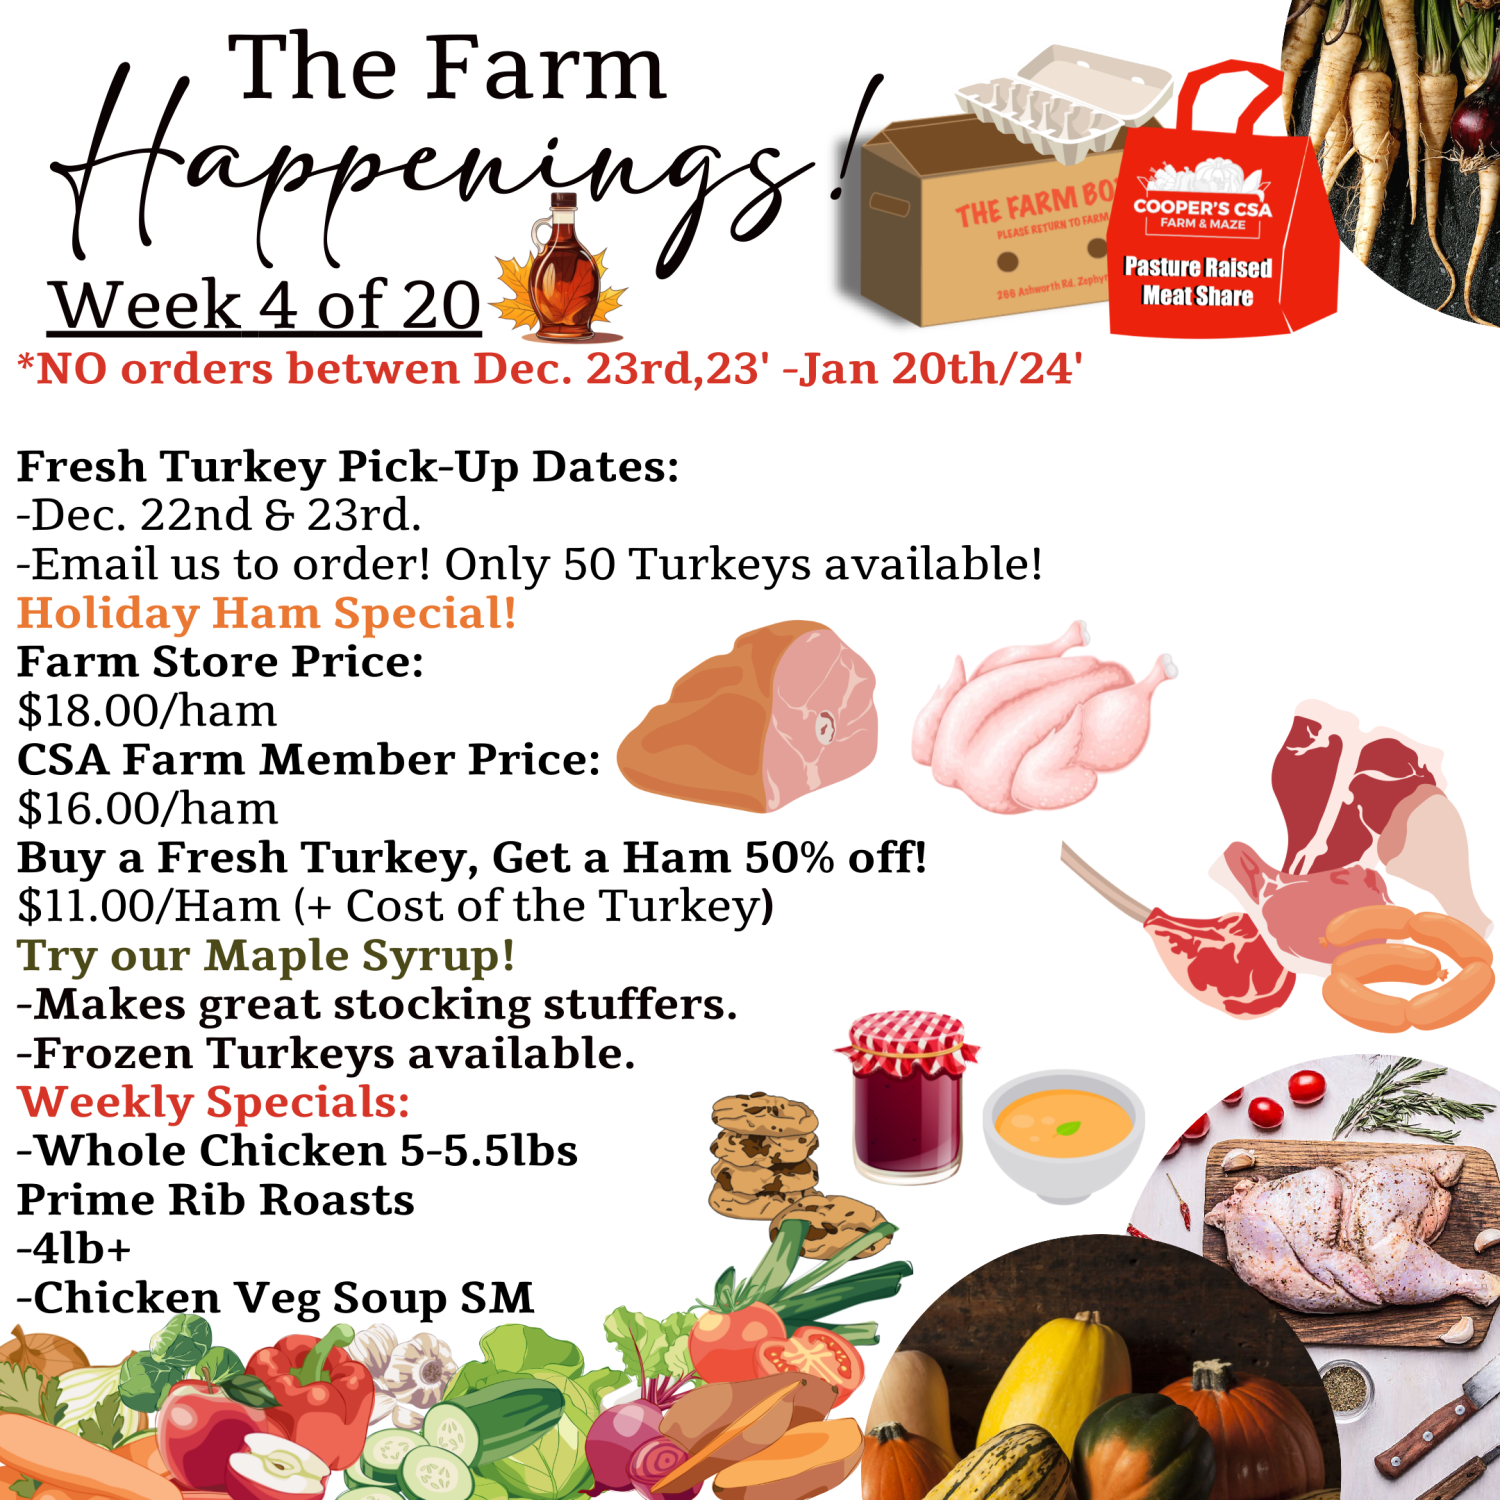 Next Happening: "The Farm Box"-Coopers CSA Farm Farm Happenings Dec. 5-9th